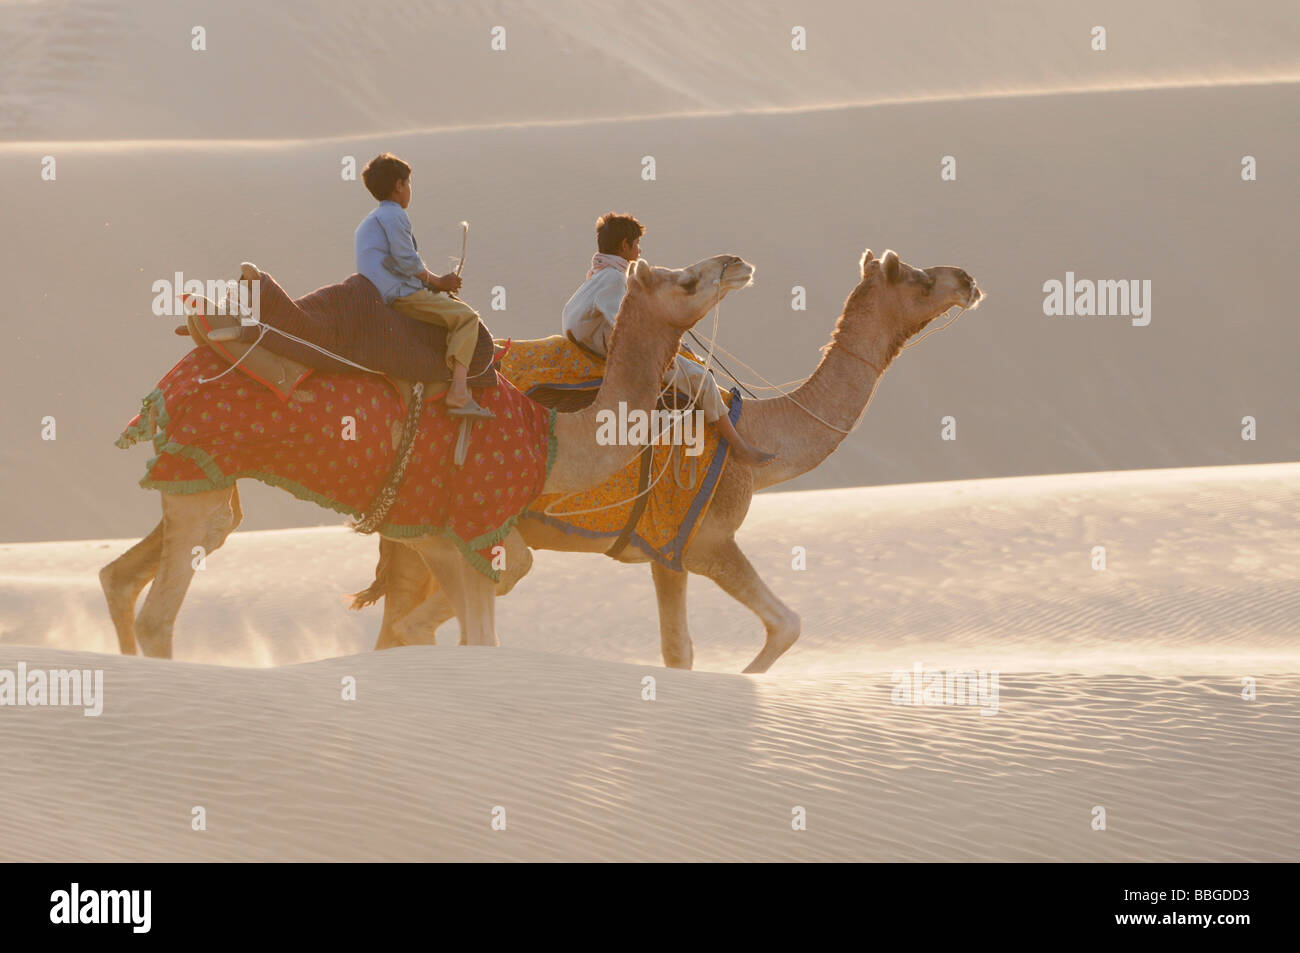 Los jinetes de camellos en el desierto de Thar, Sam cerca de Jaisalmer Rajasthan, India septentrional, Asia Foto de stock